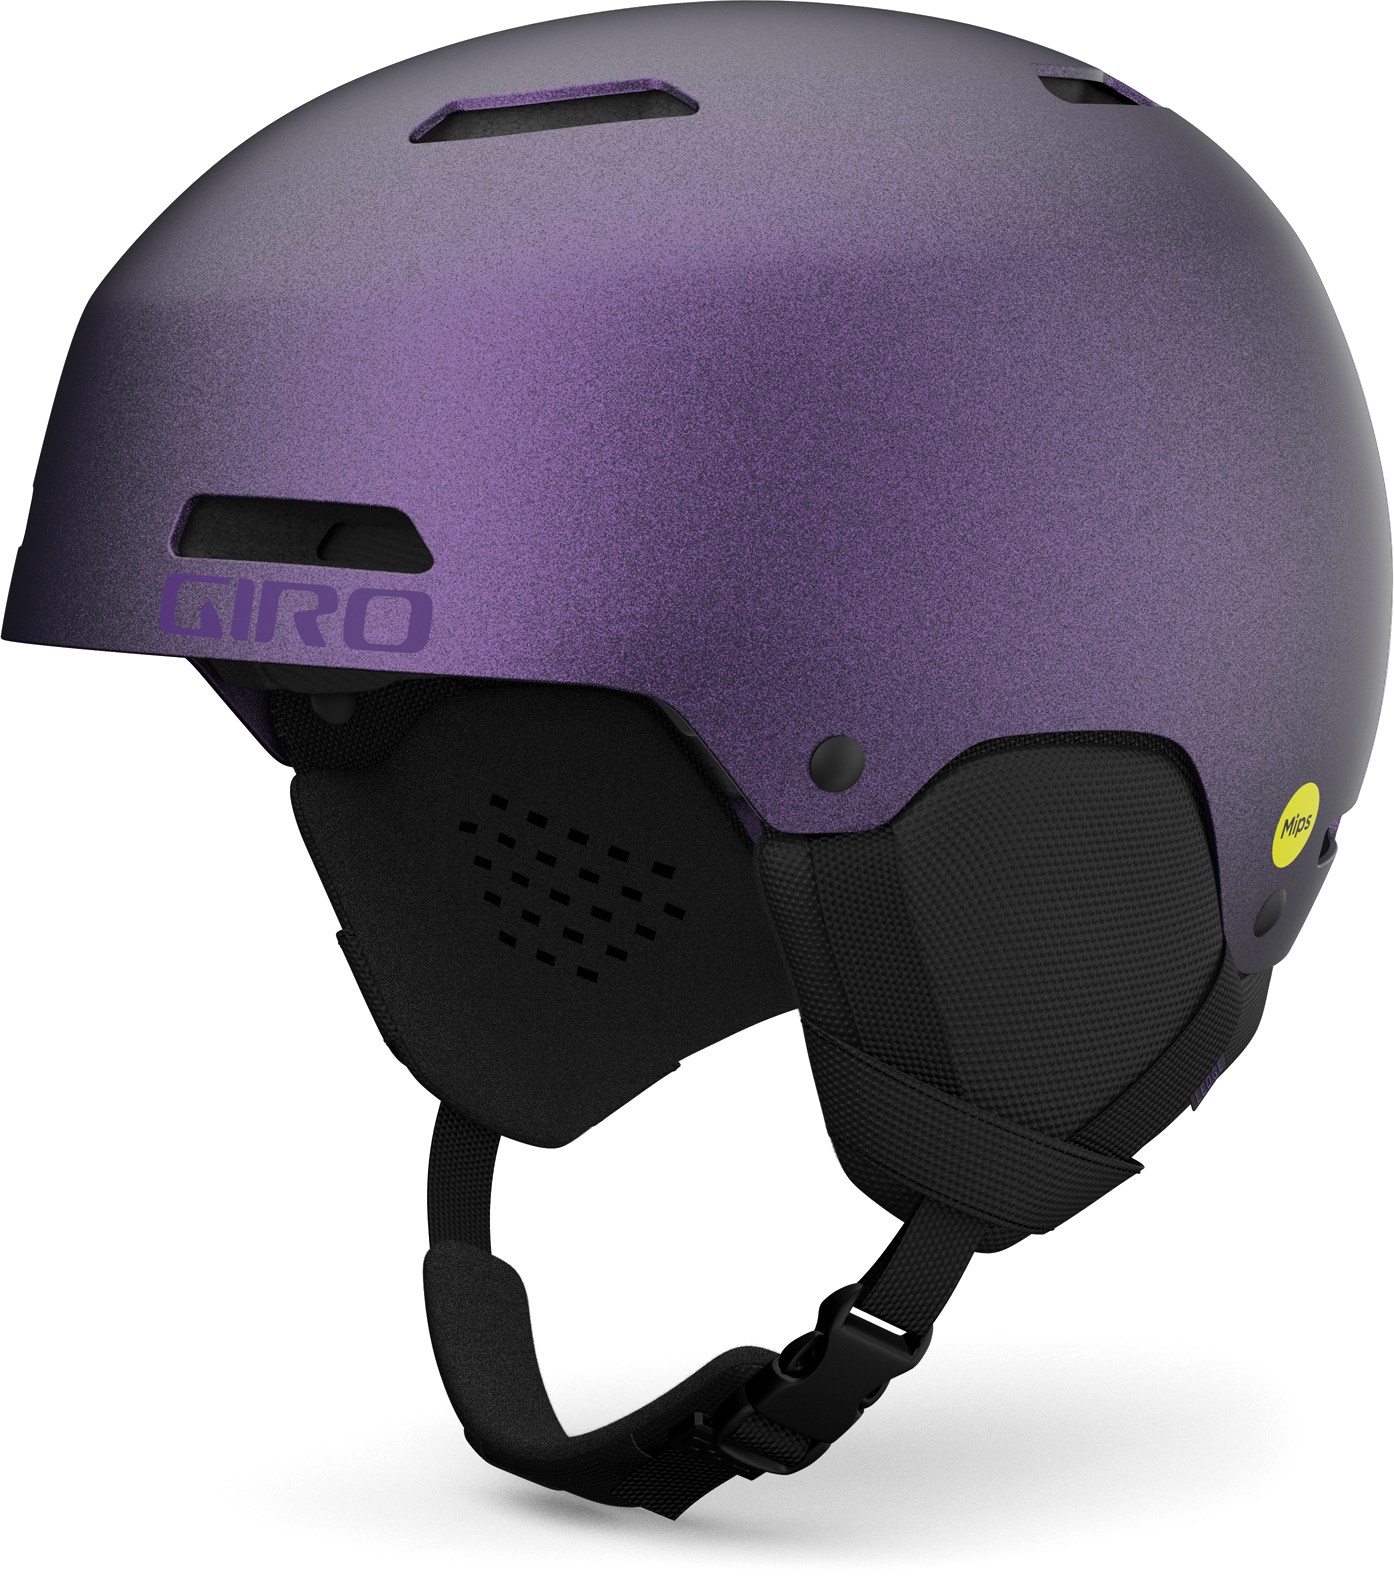 Снежный шлем Ledge Mips Giro, фиолетовый